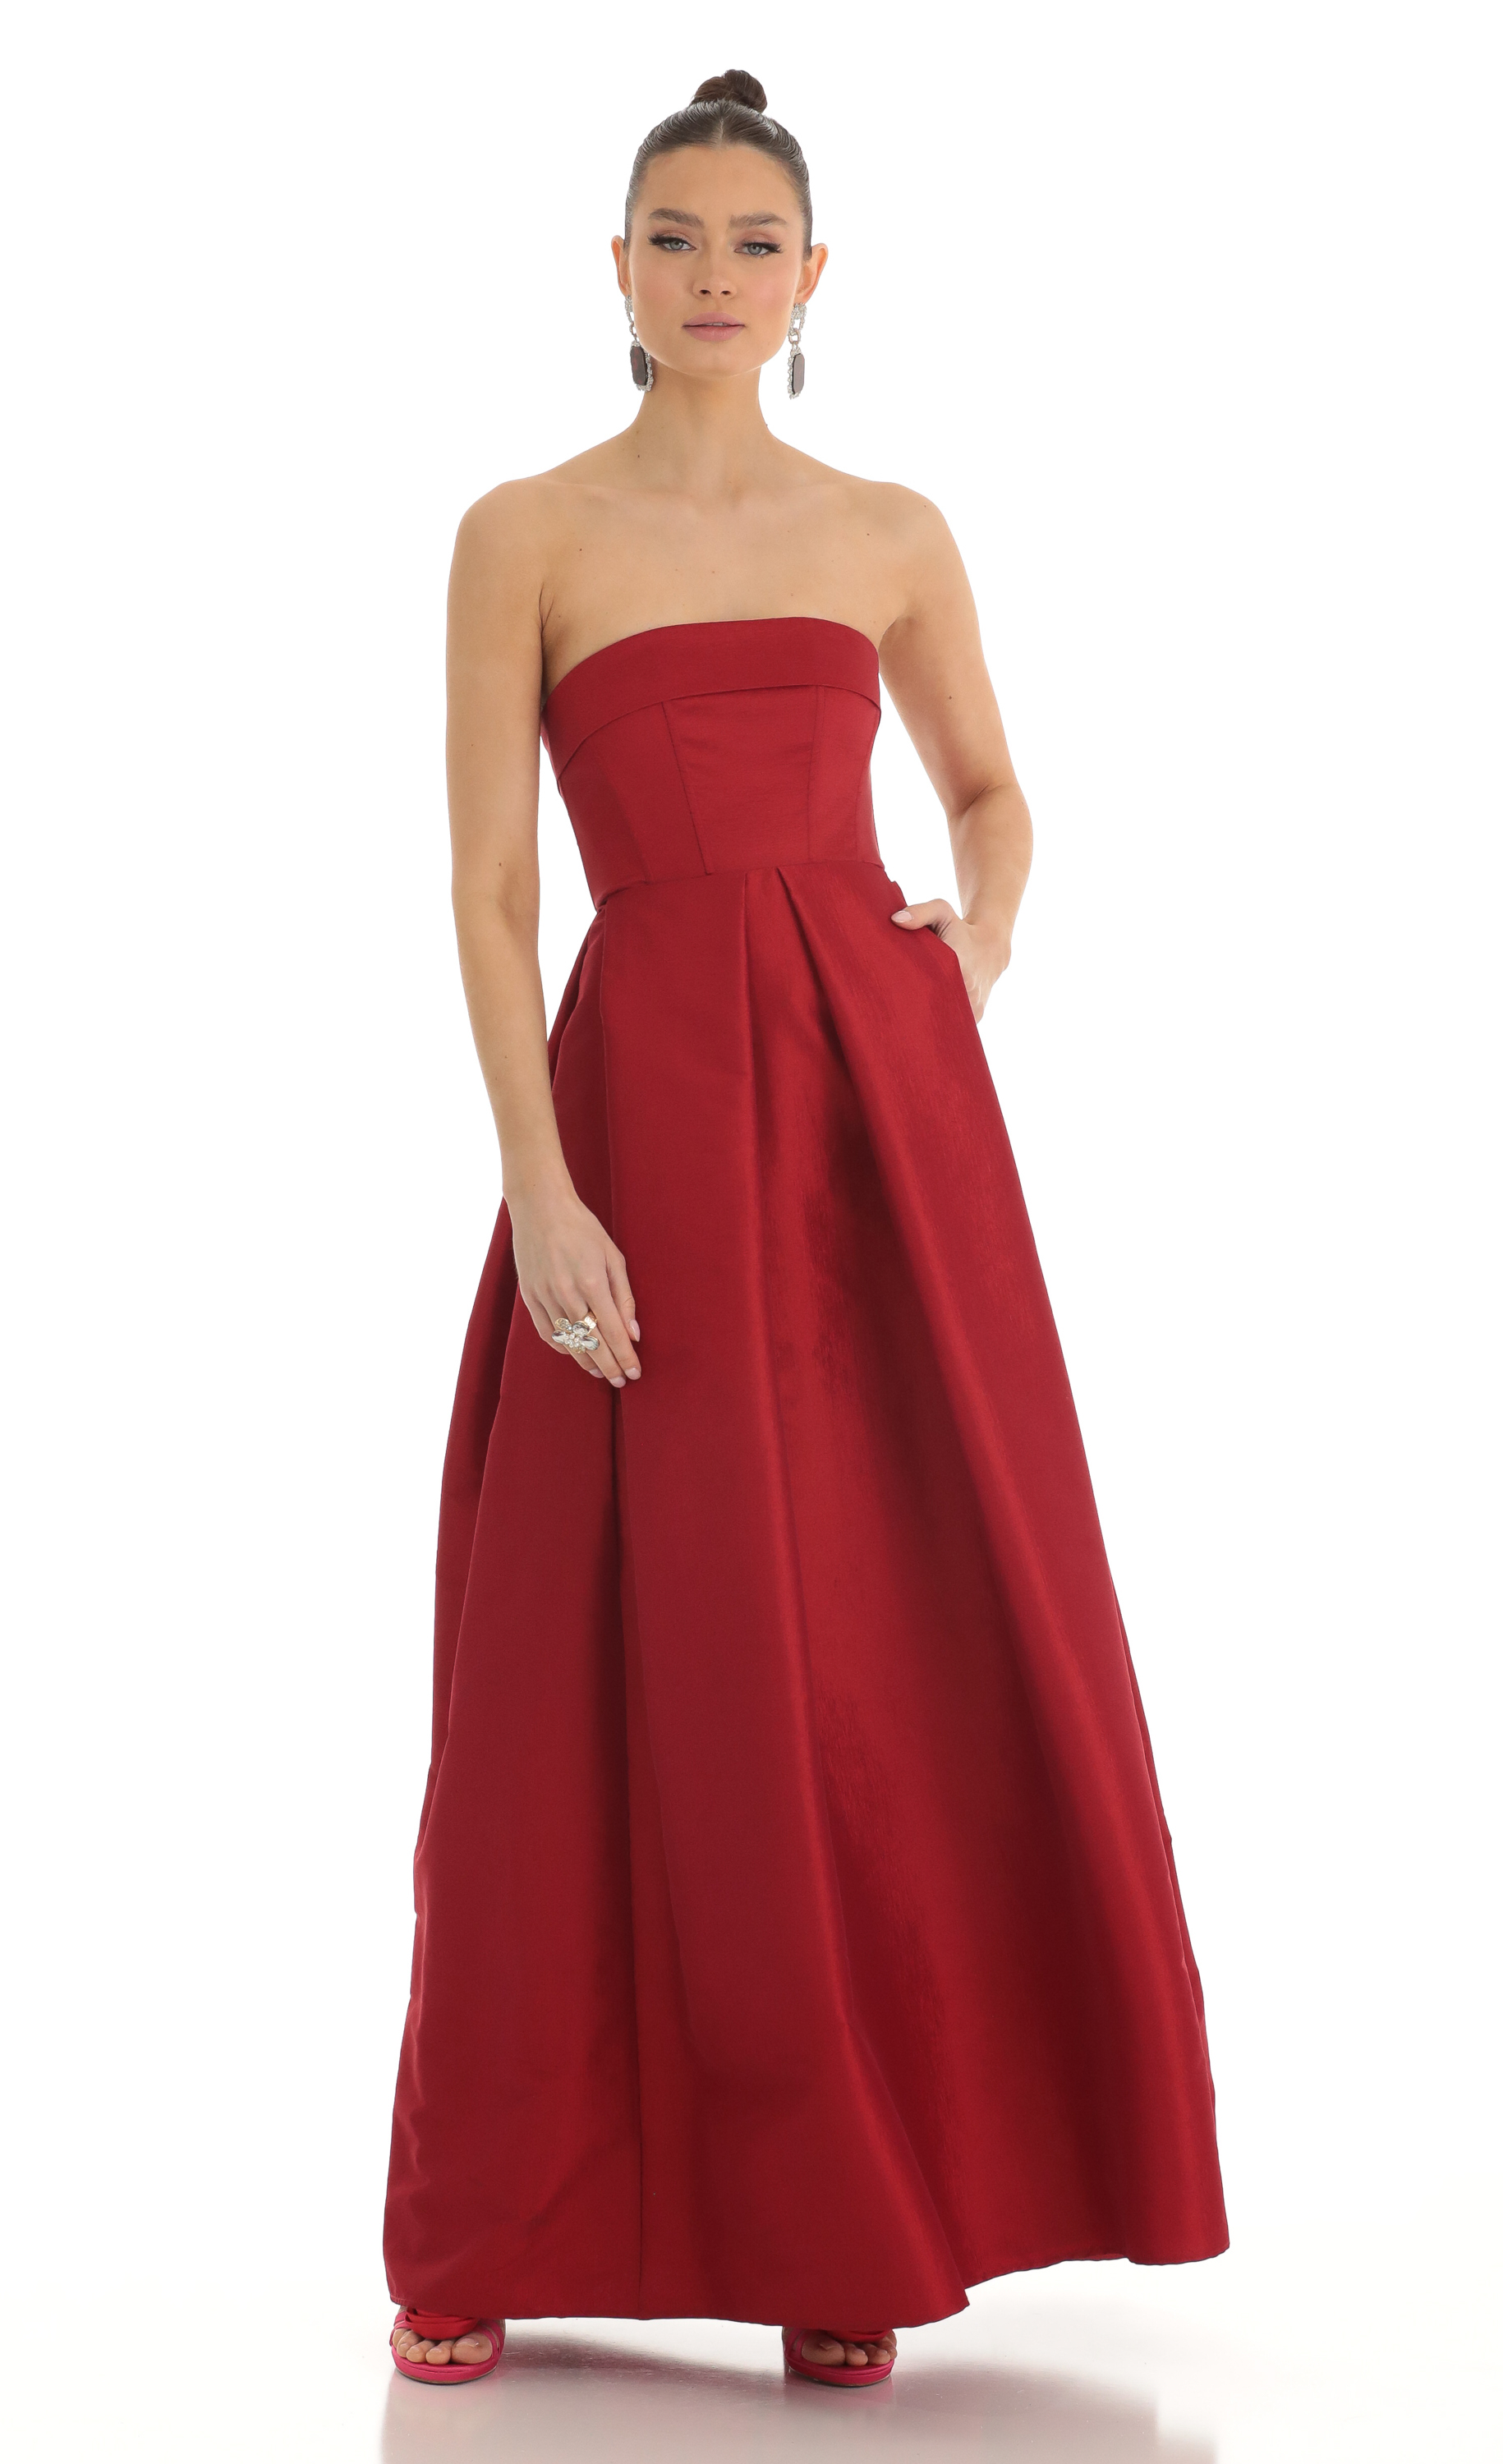 Kerran Strapless Corset Maxi Dress in Red